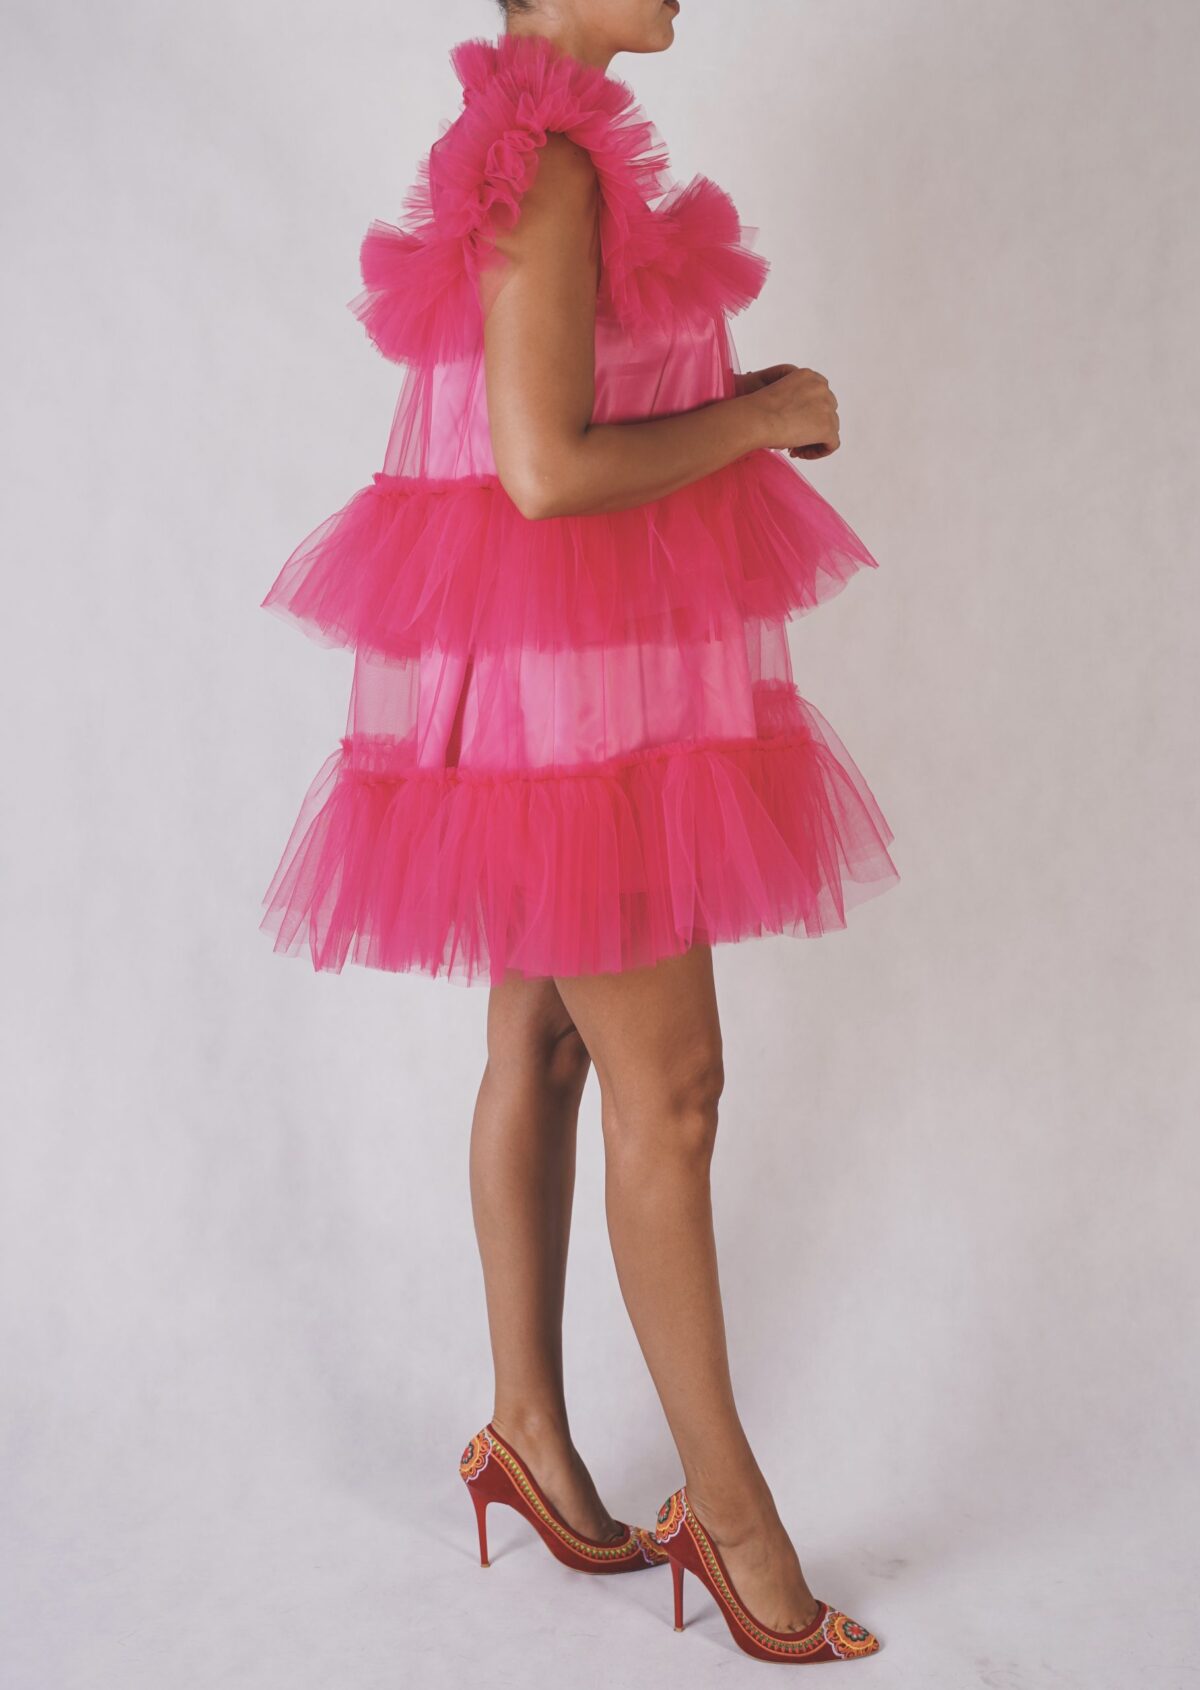 IMG 1907 scaled 2 HOBRAT pink fancy dress-code:990900134